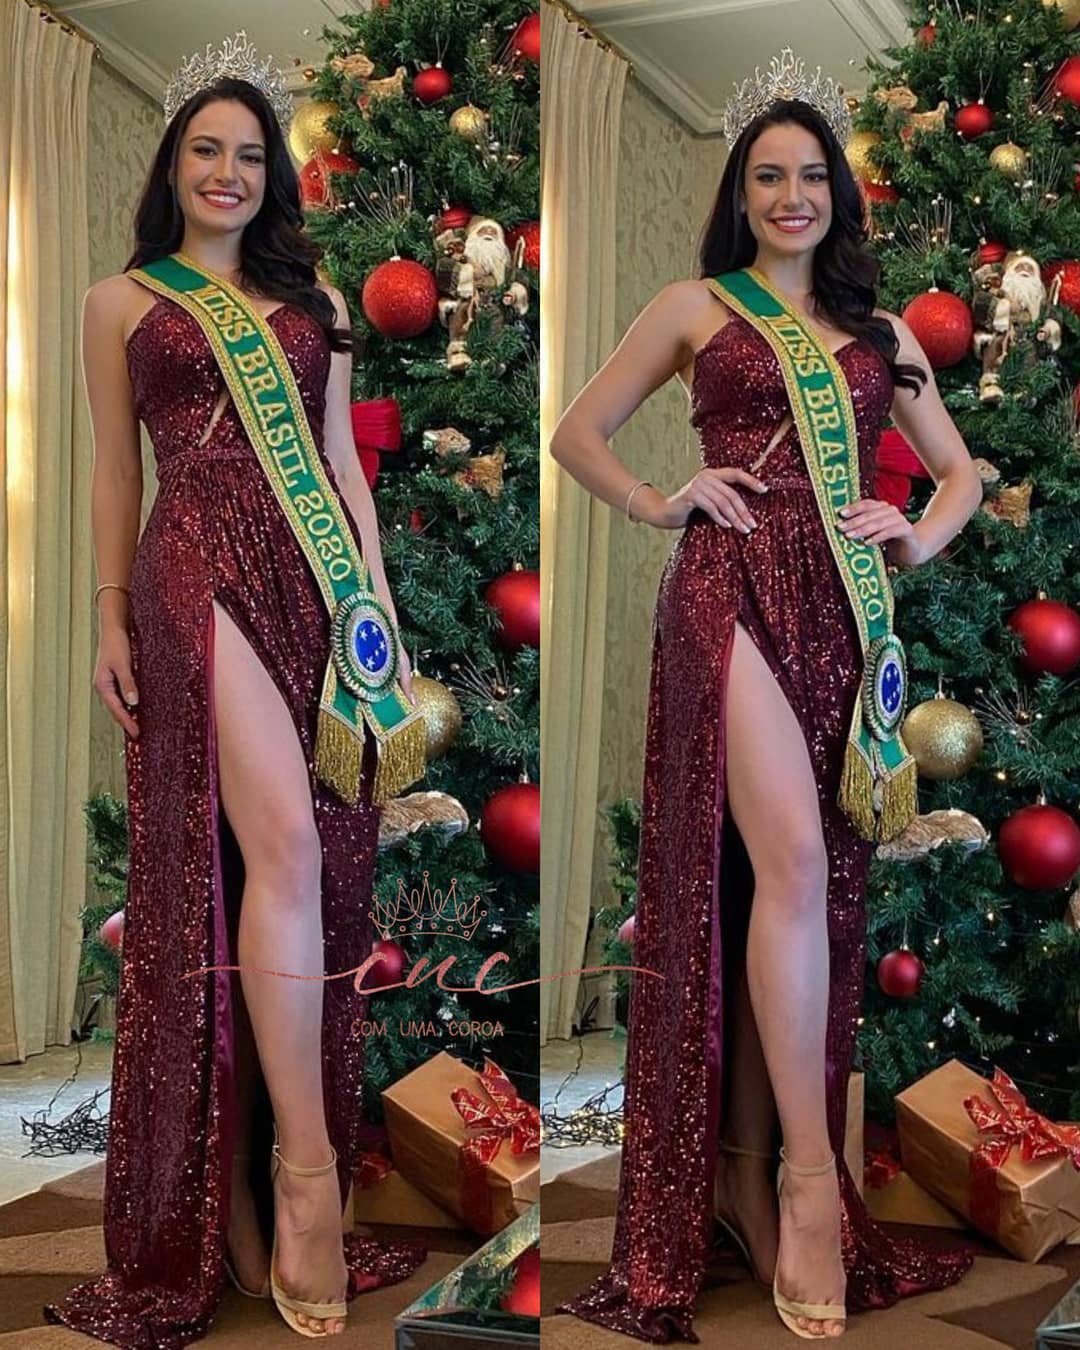 julia gama, miss brasil universo 2020/top 11 de miss world 2014. part I. - Página 60 Munhe723